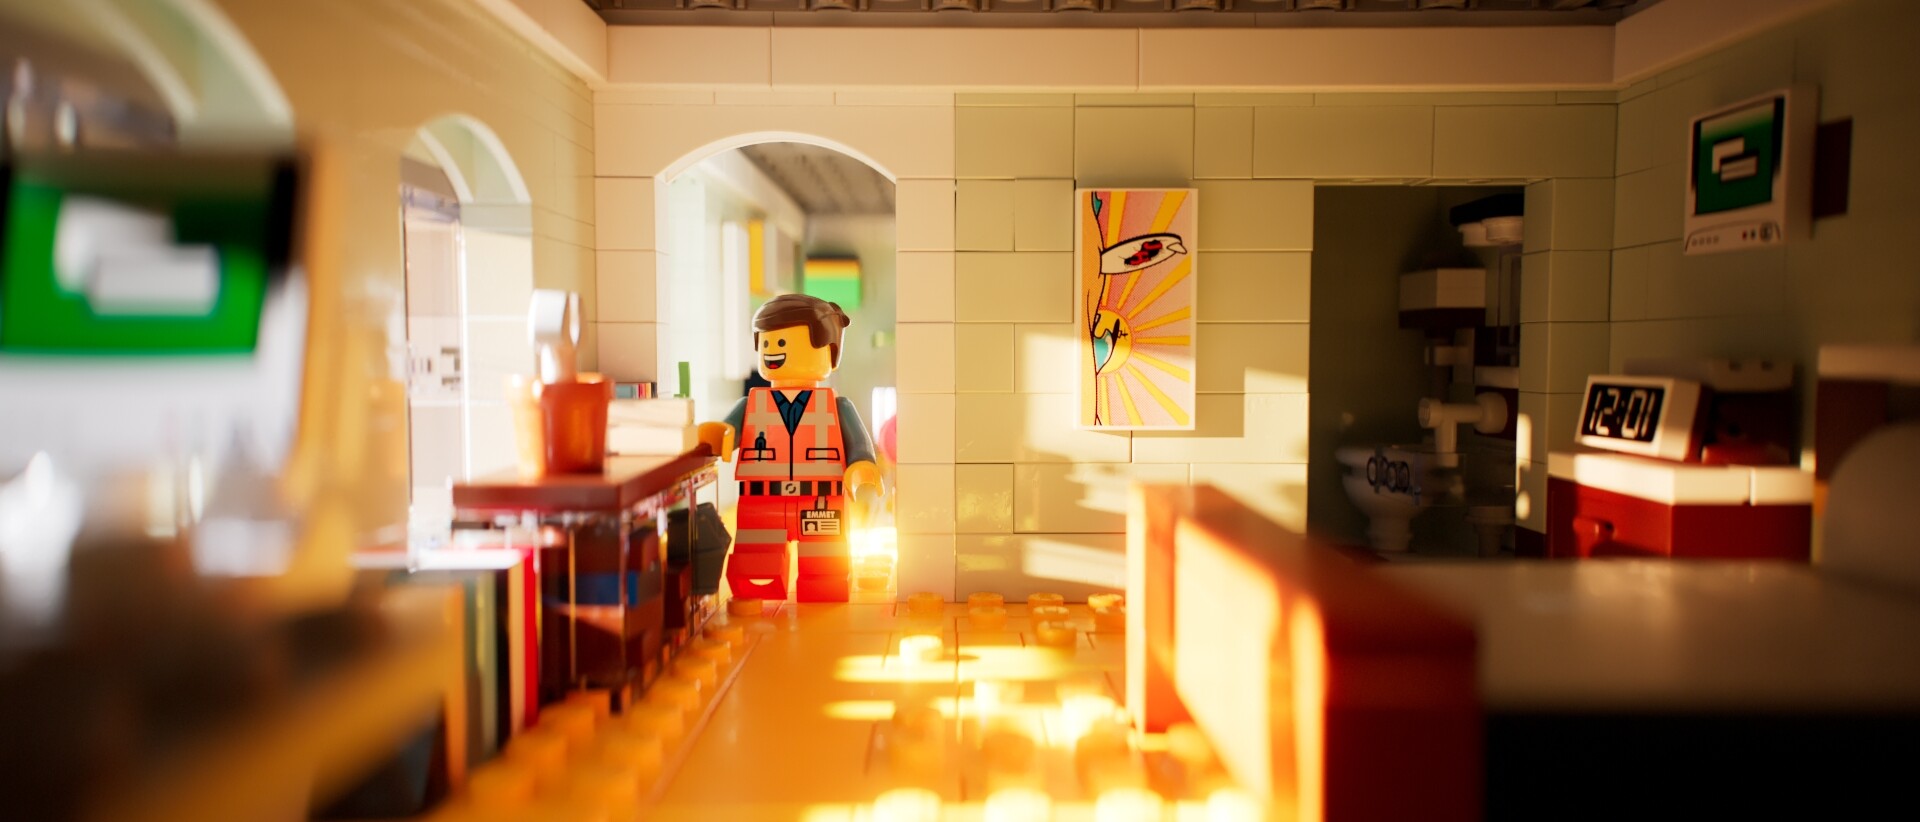 Steffen Hampel - Emmet's room from the Lego Movie